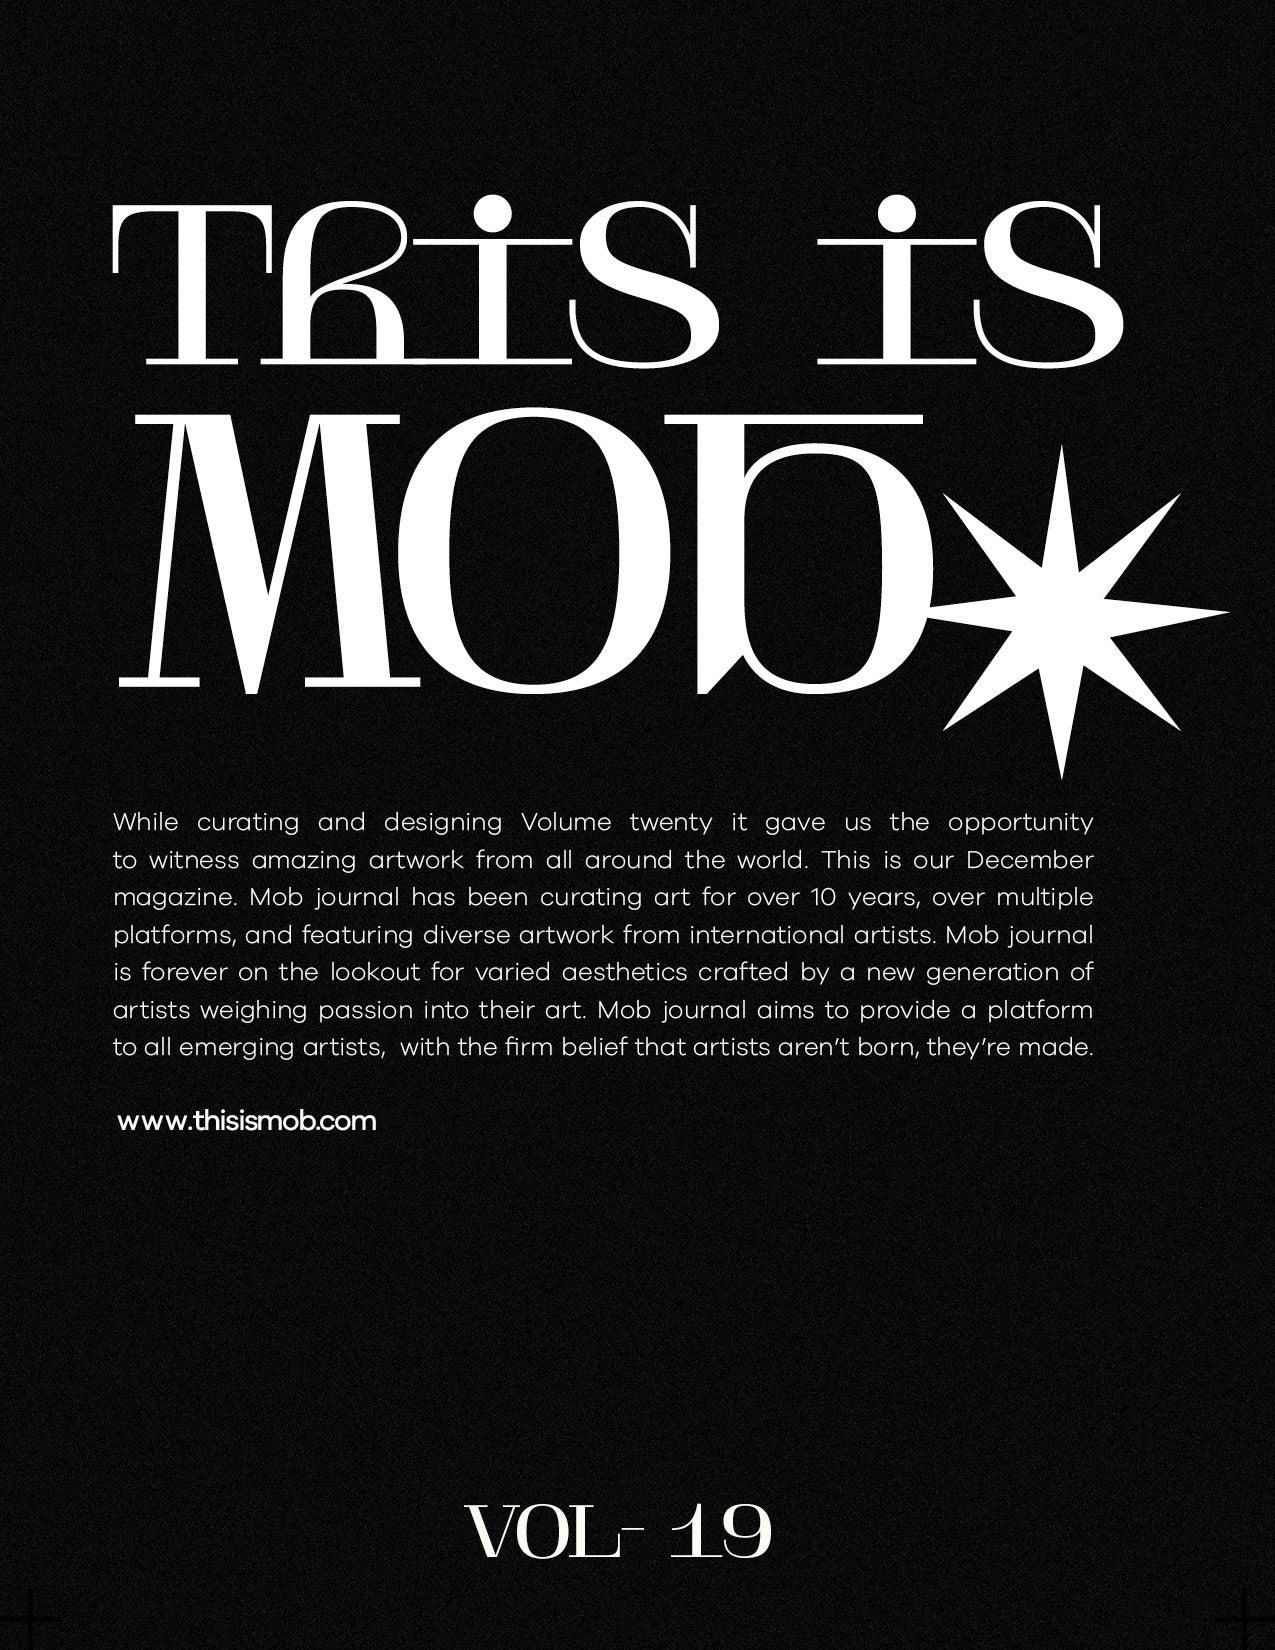 MOB JOURNAL | VOLUME TWENTY | ISSUE #01 - Mob Journal